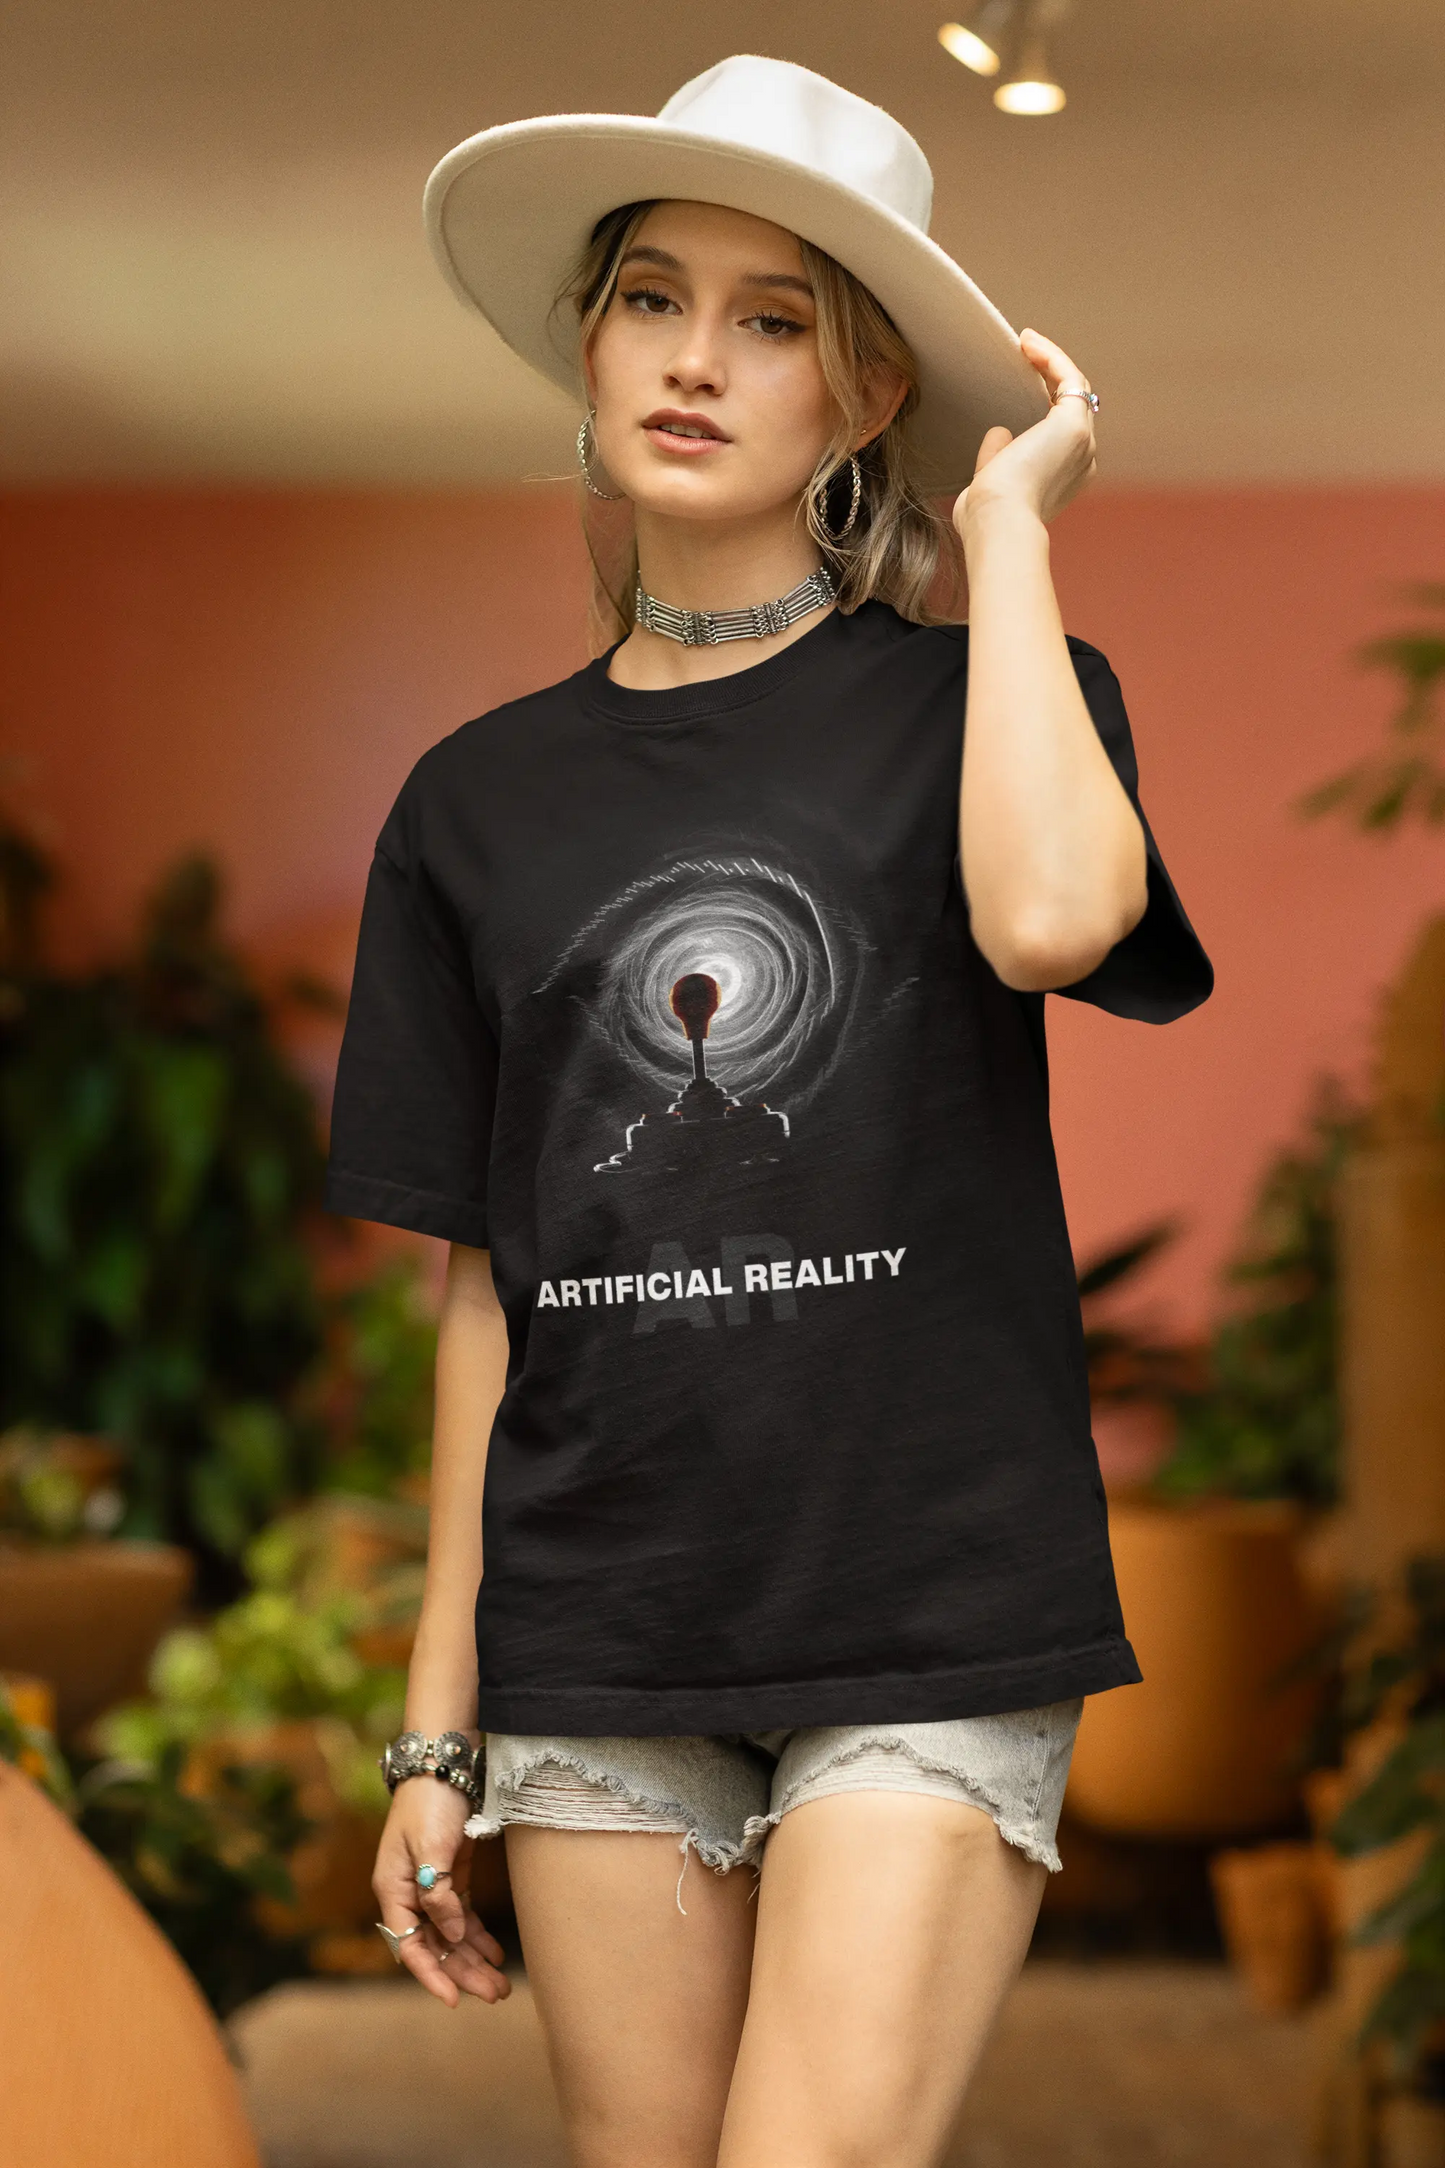 Artificial Reality Premium Men's T-shirt